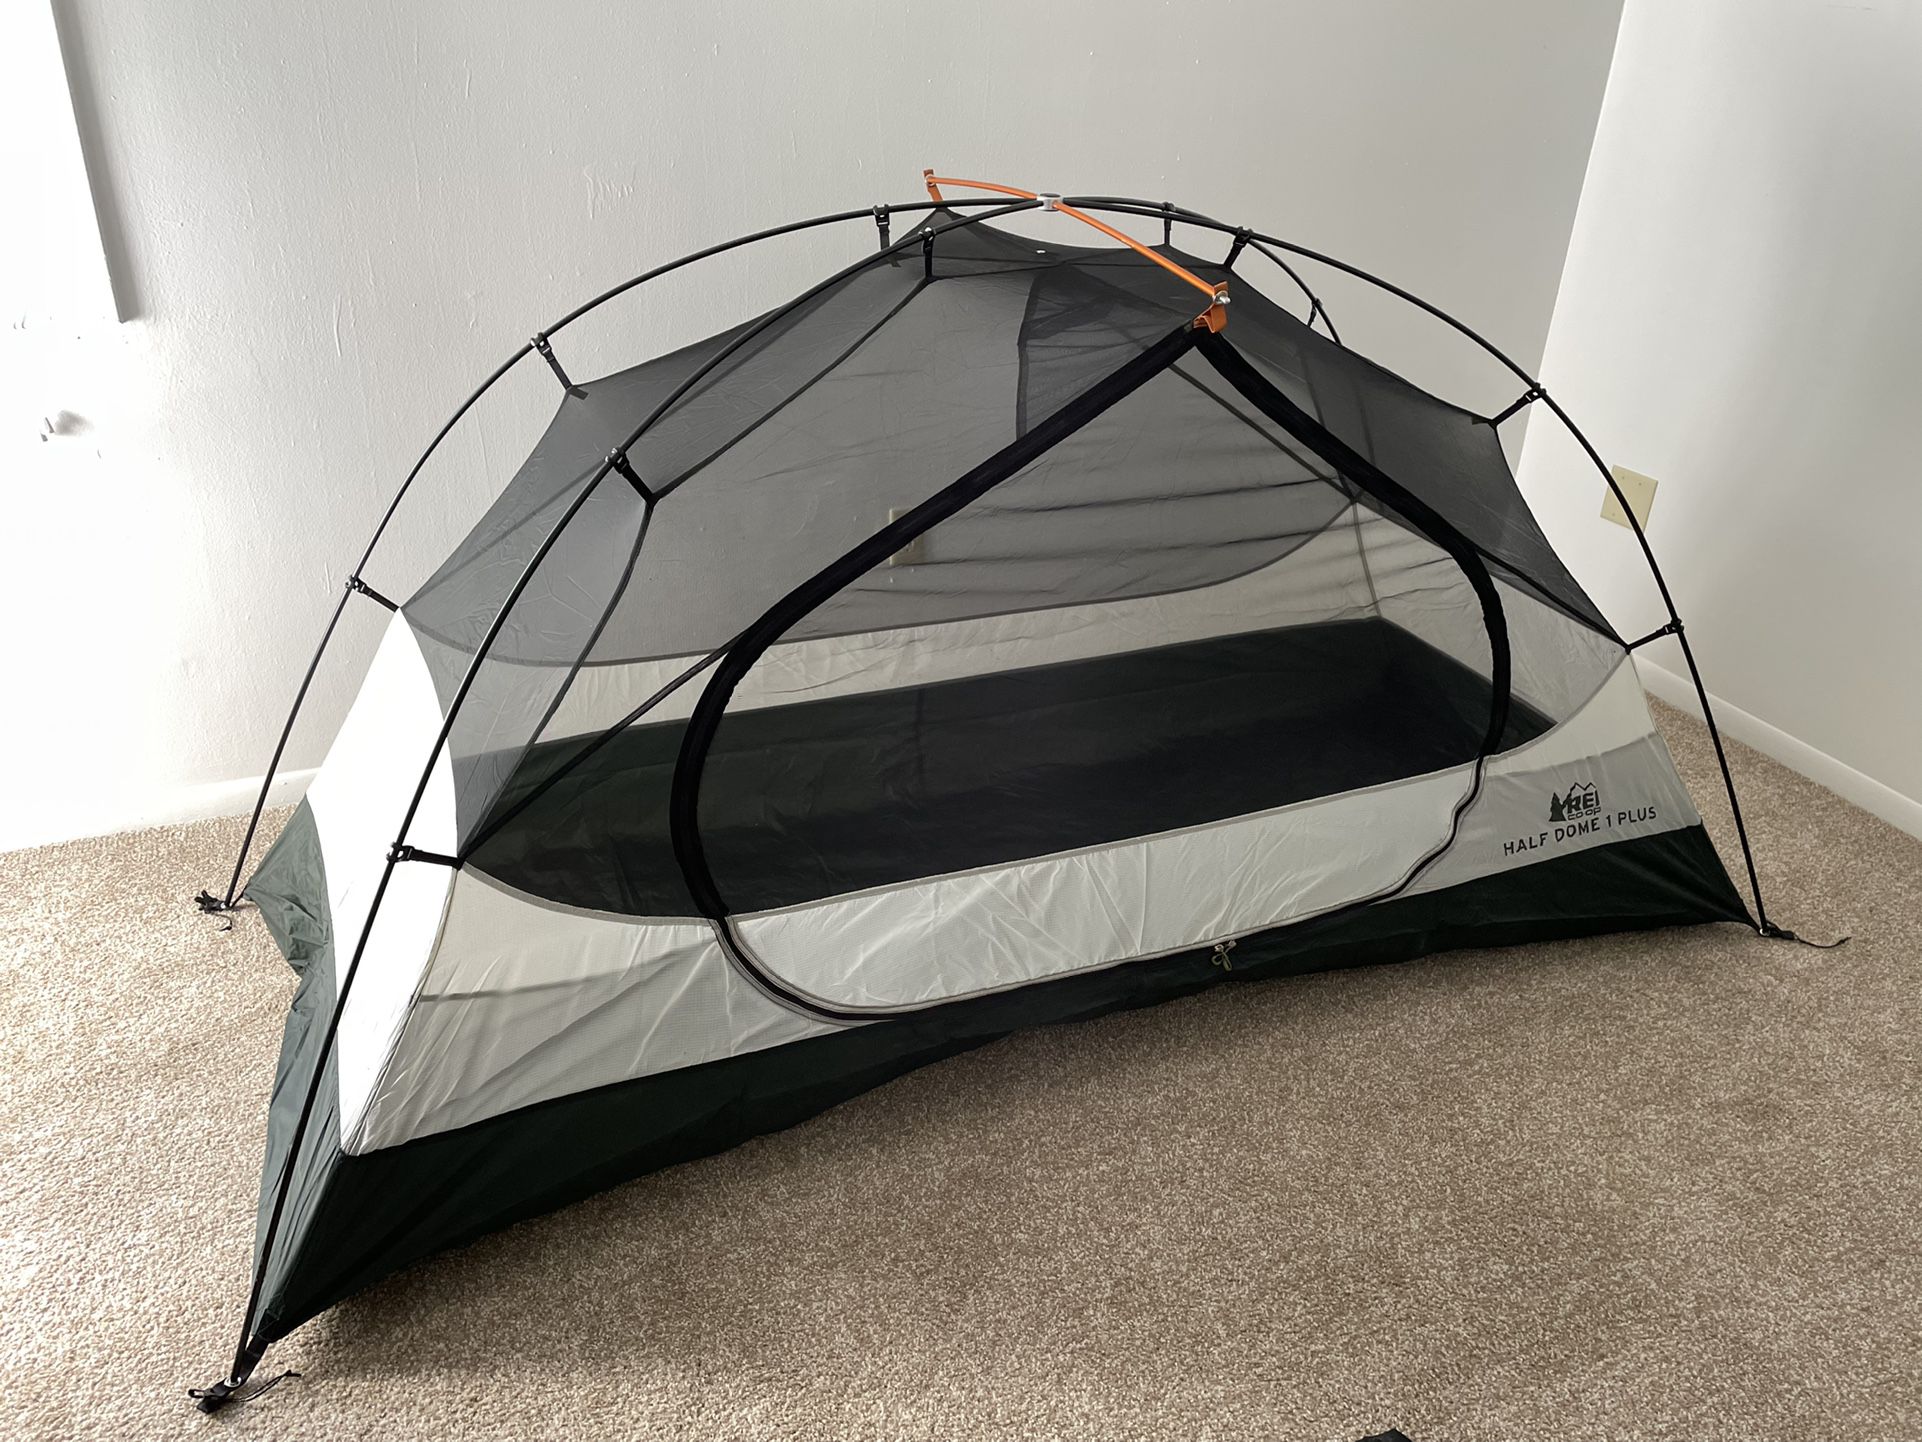 REI Half Dome 1 Plus Tent